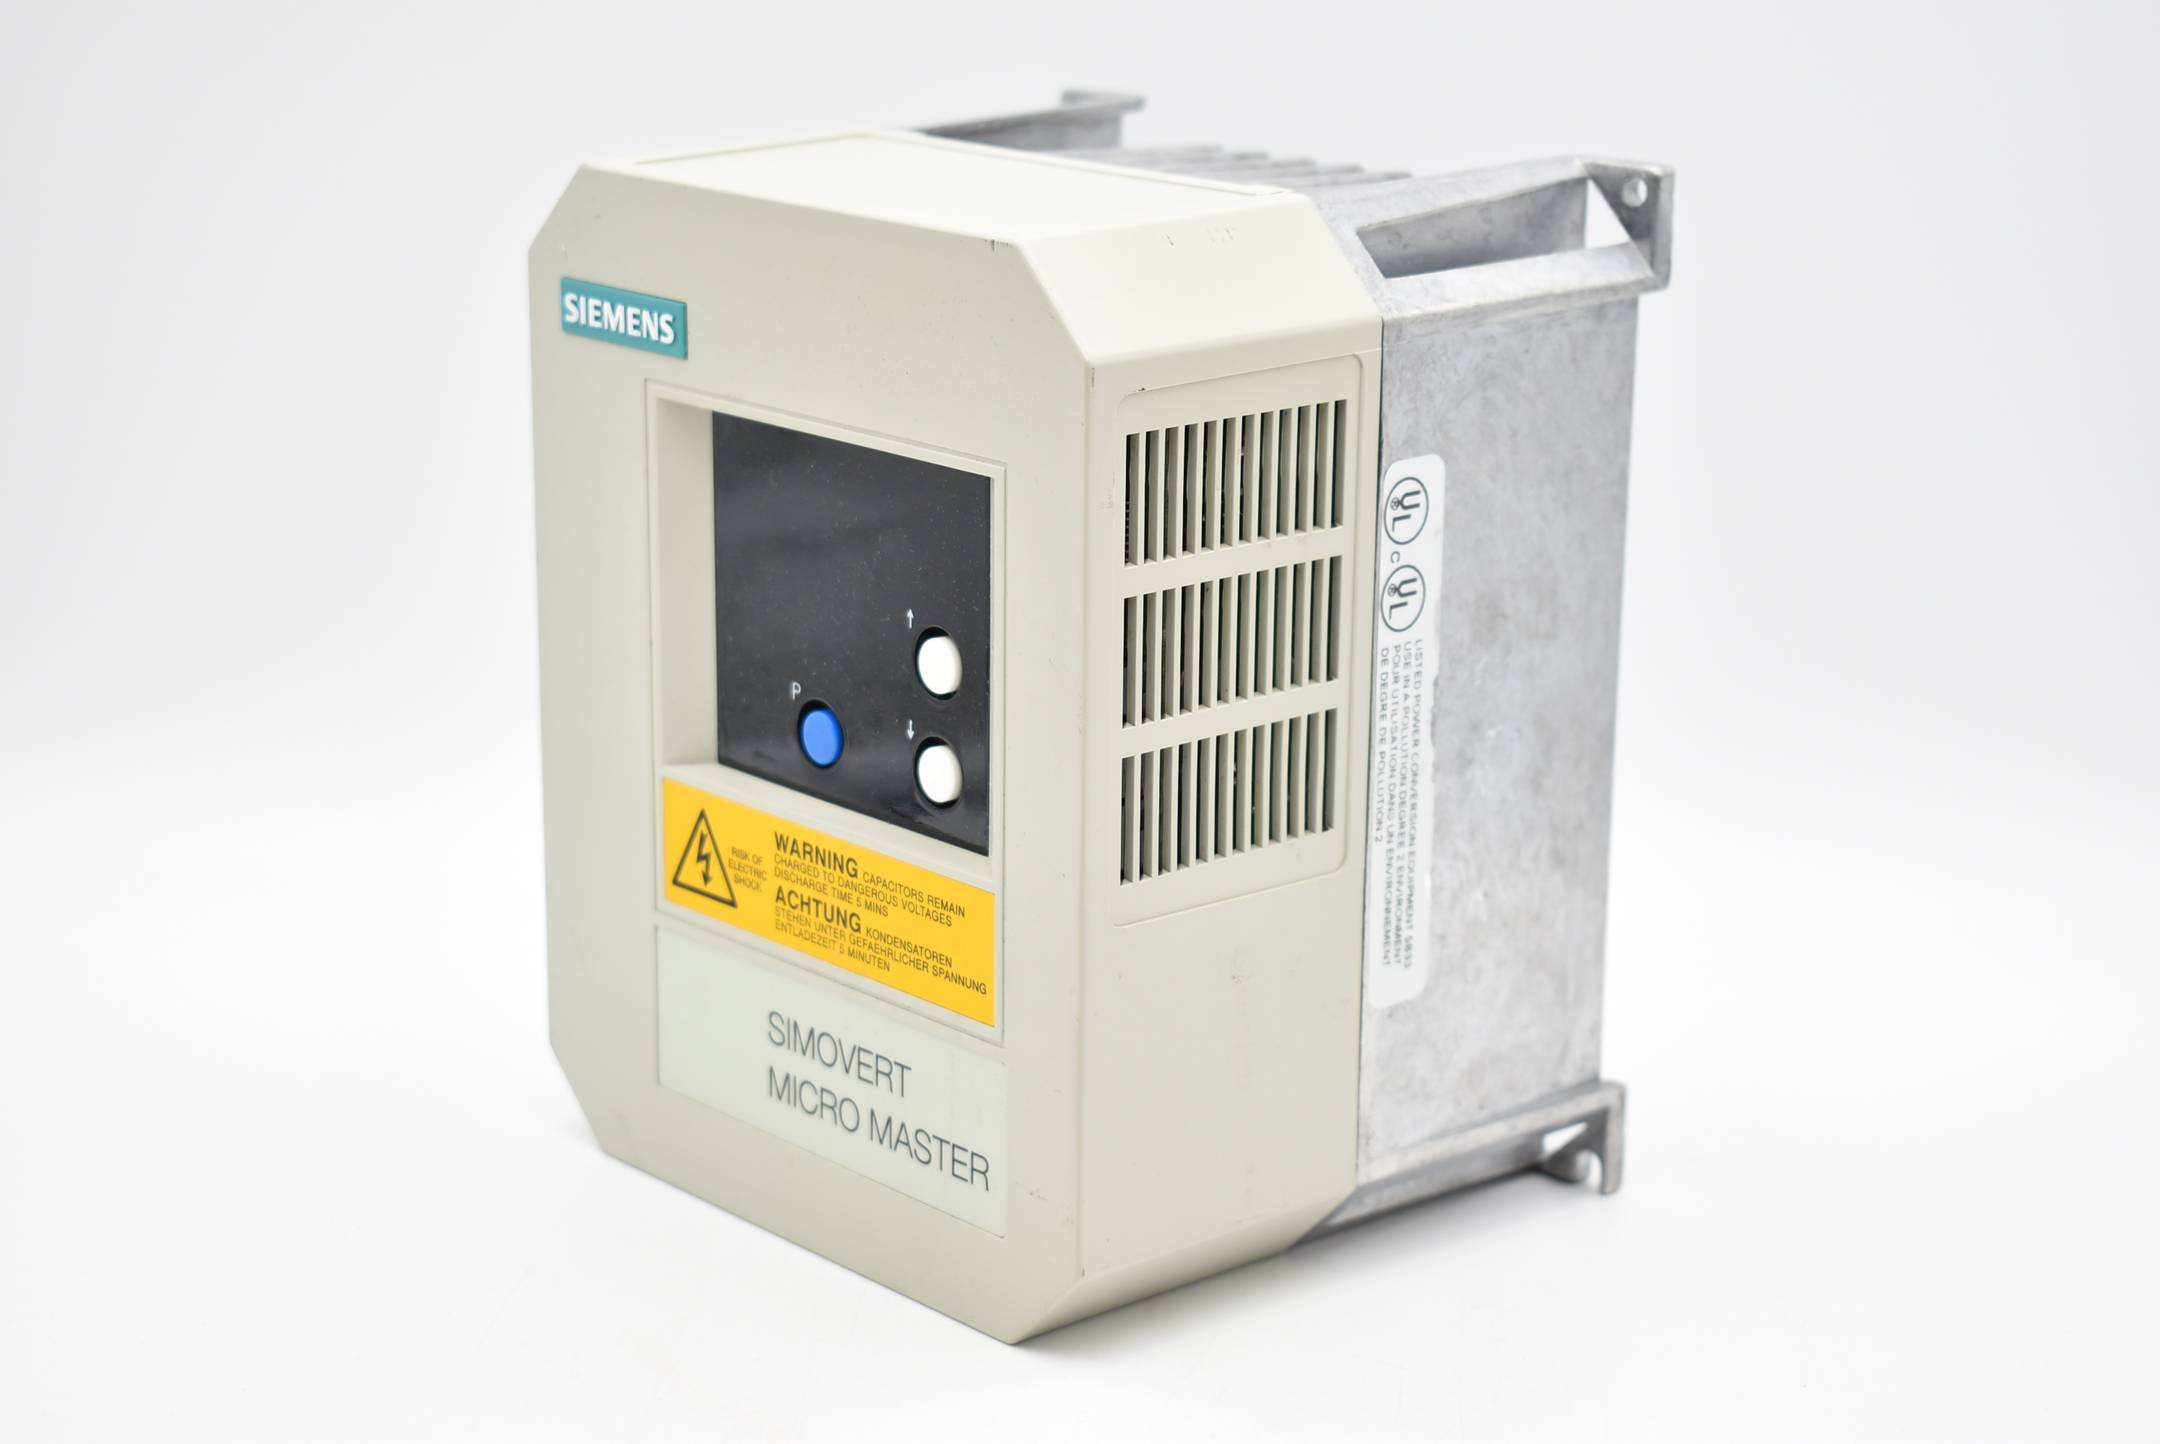 Siemens MicroMaster 6SE3013-4BA00 ( 6SE3 013-4BA00 ) Issue M.1